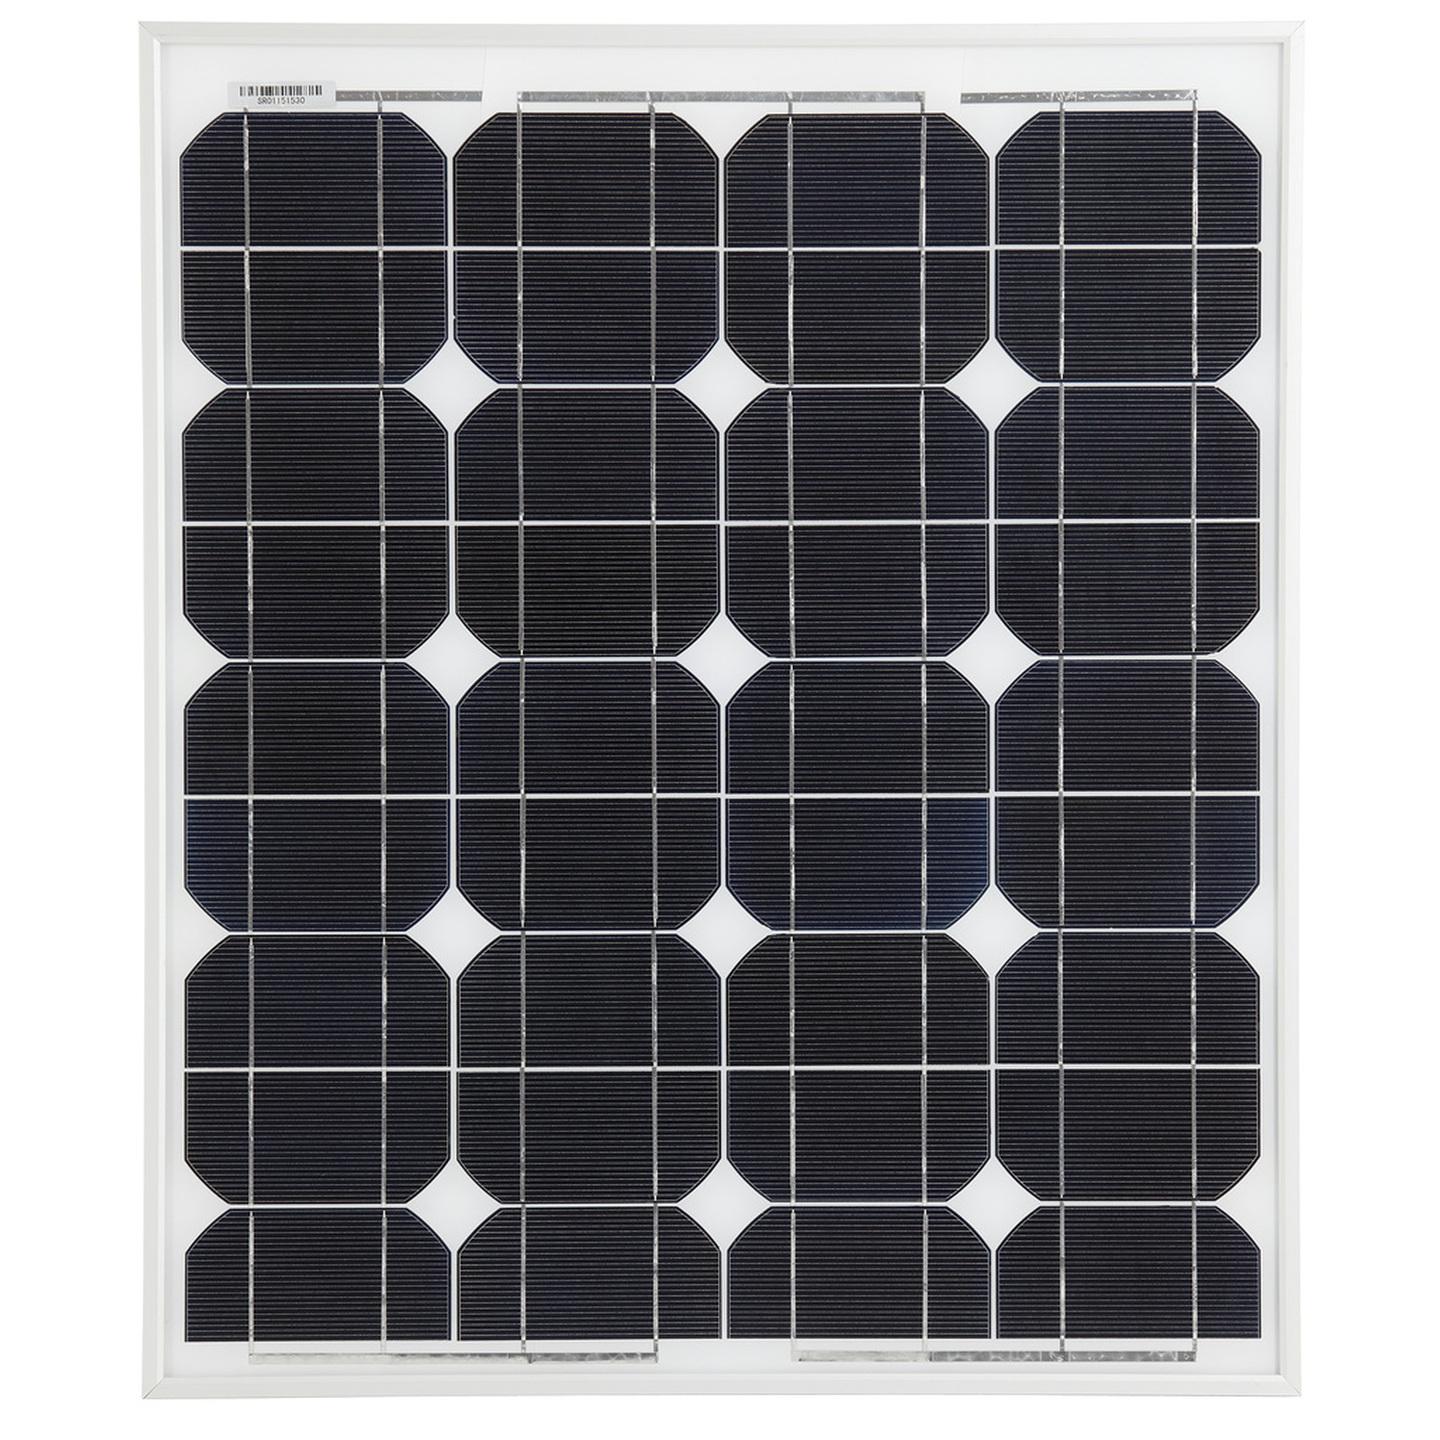 Powertech Monocrystalline Solar Panel - 40W